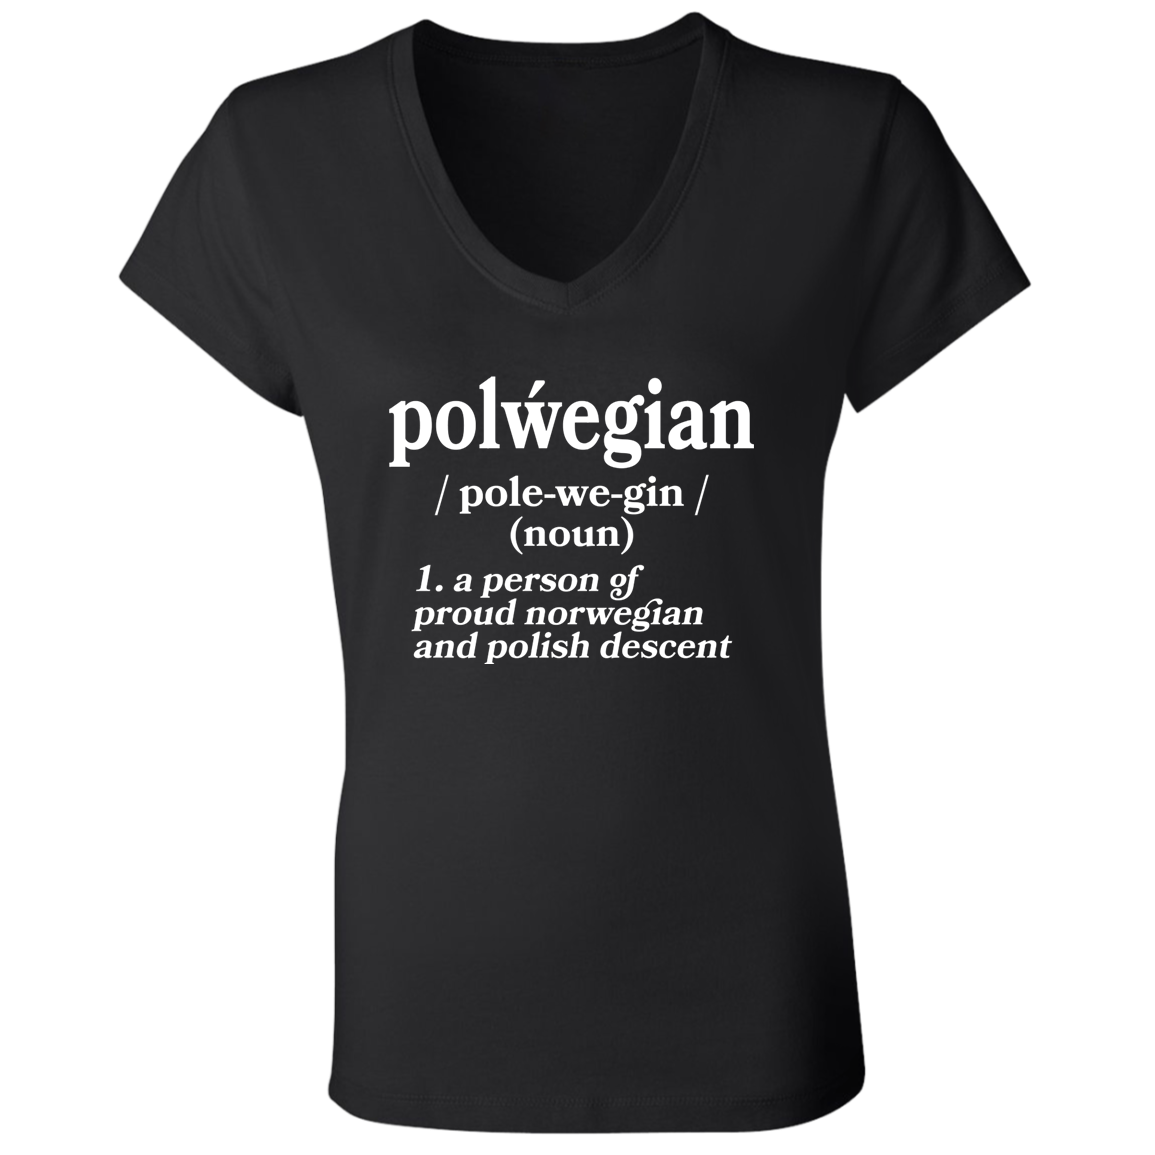 Polwegian - Norwegian and Polish Descent Apparel CustomCat B6005 Ladies' Jersey V-Neck T-Shirt Black S